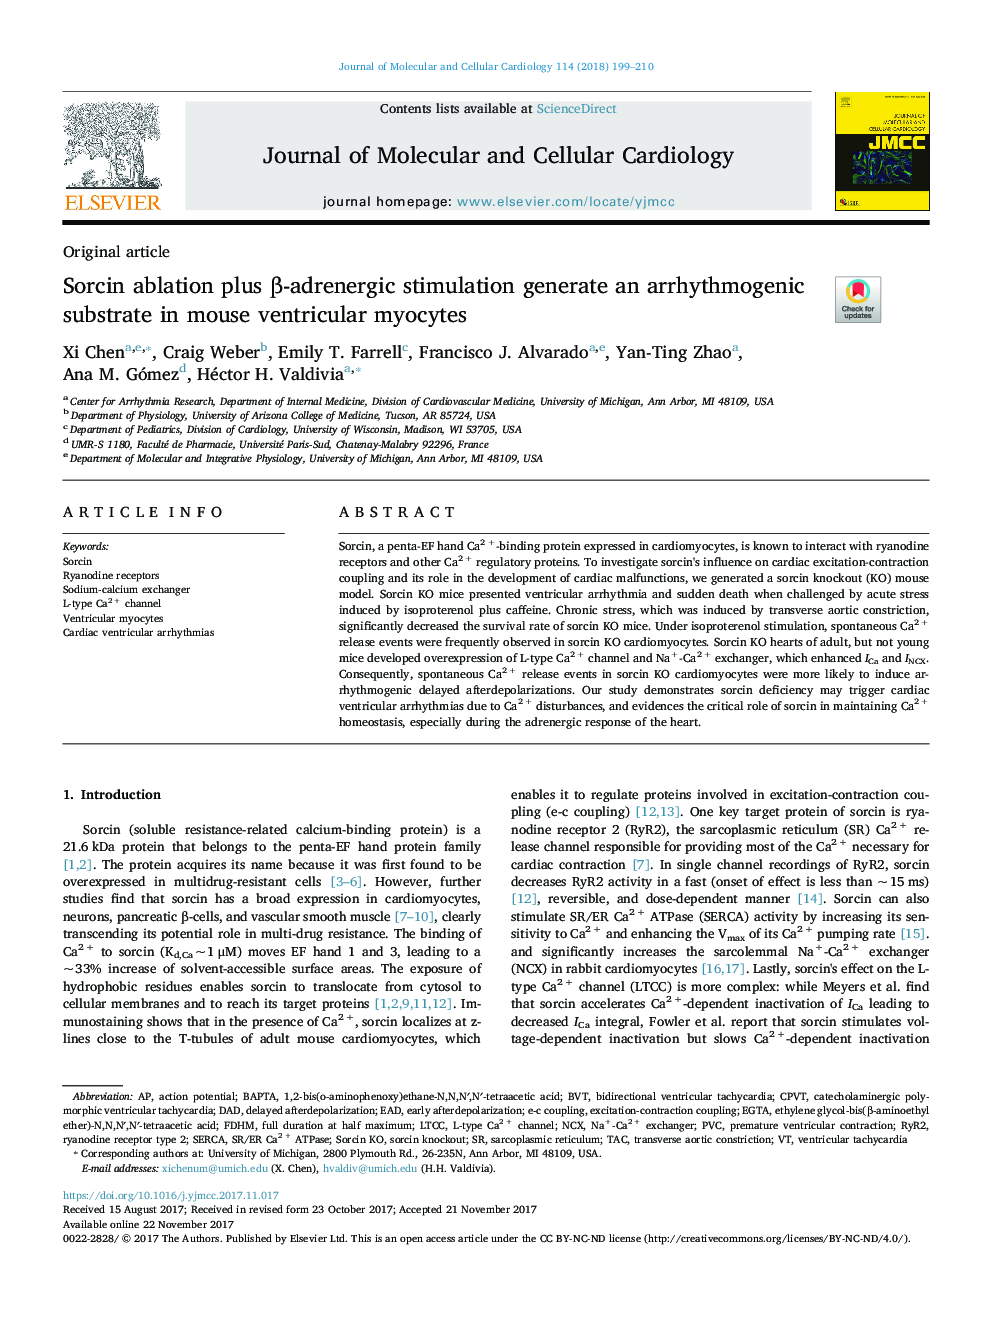 Sorcin ablation plus Î²-adrenergic stimulation generate an arrhythmogenic substrate in mouse ventricular myocytes